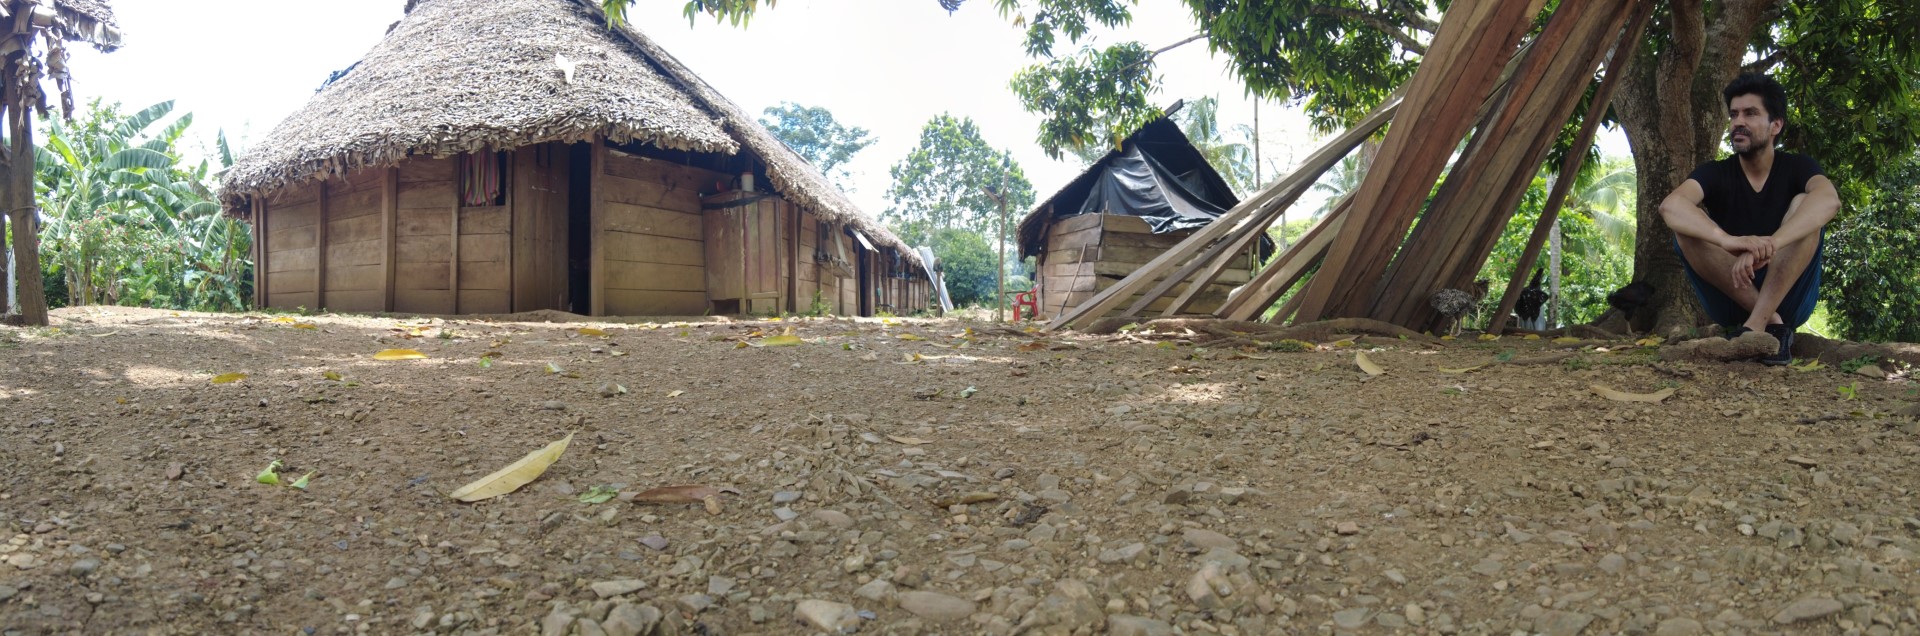 Vargas sitting on the ground near dwelling in Kuna community in Darién Tropical Rain Forest